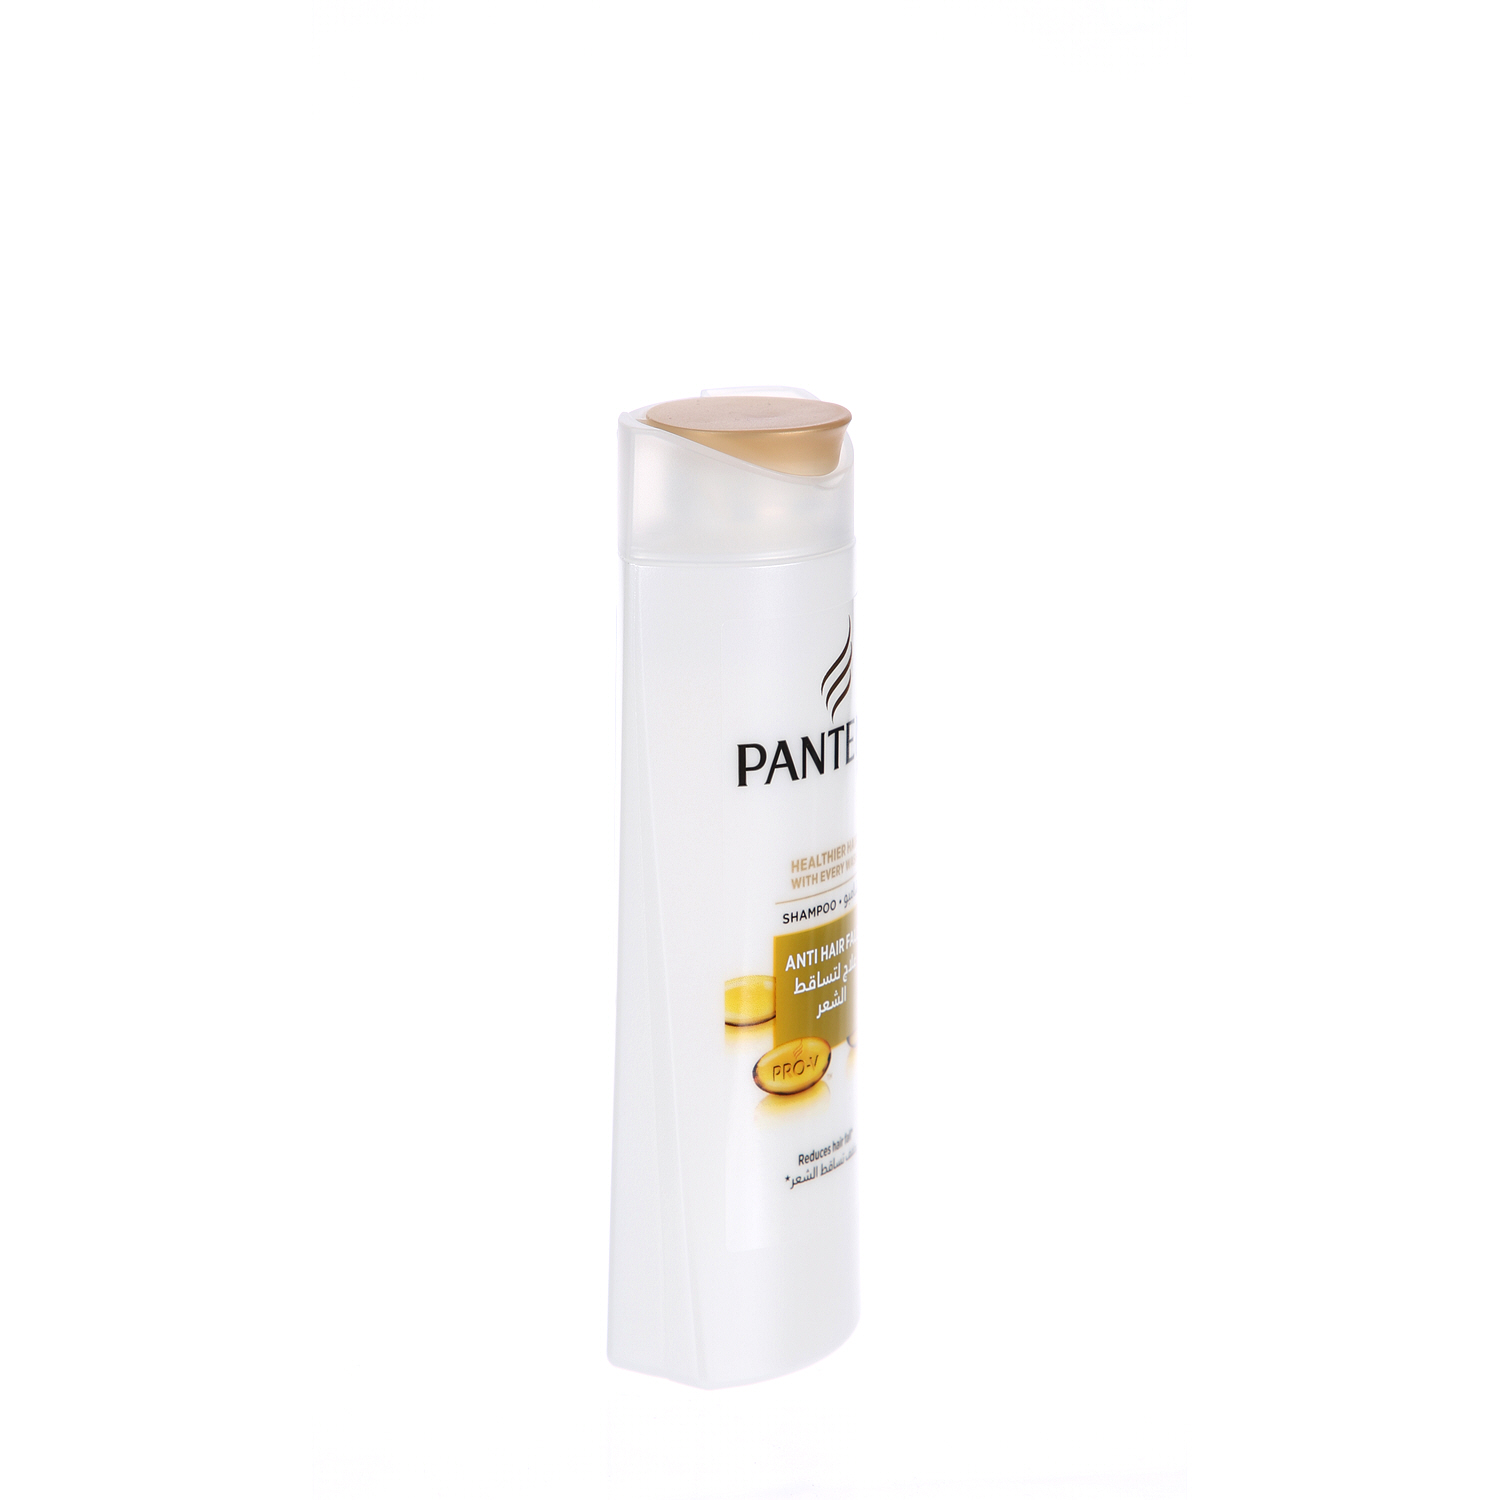 Pantene Shampoo 2 in 1 Anti Hair Fall 200 ml